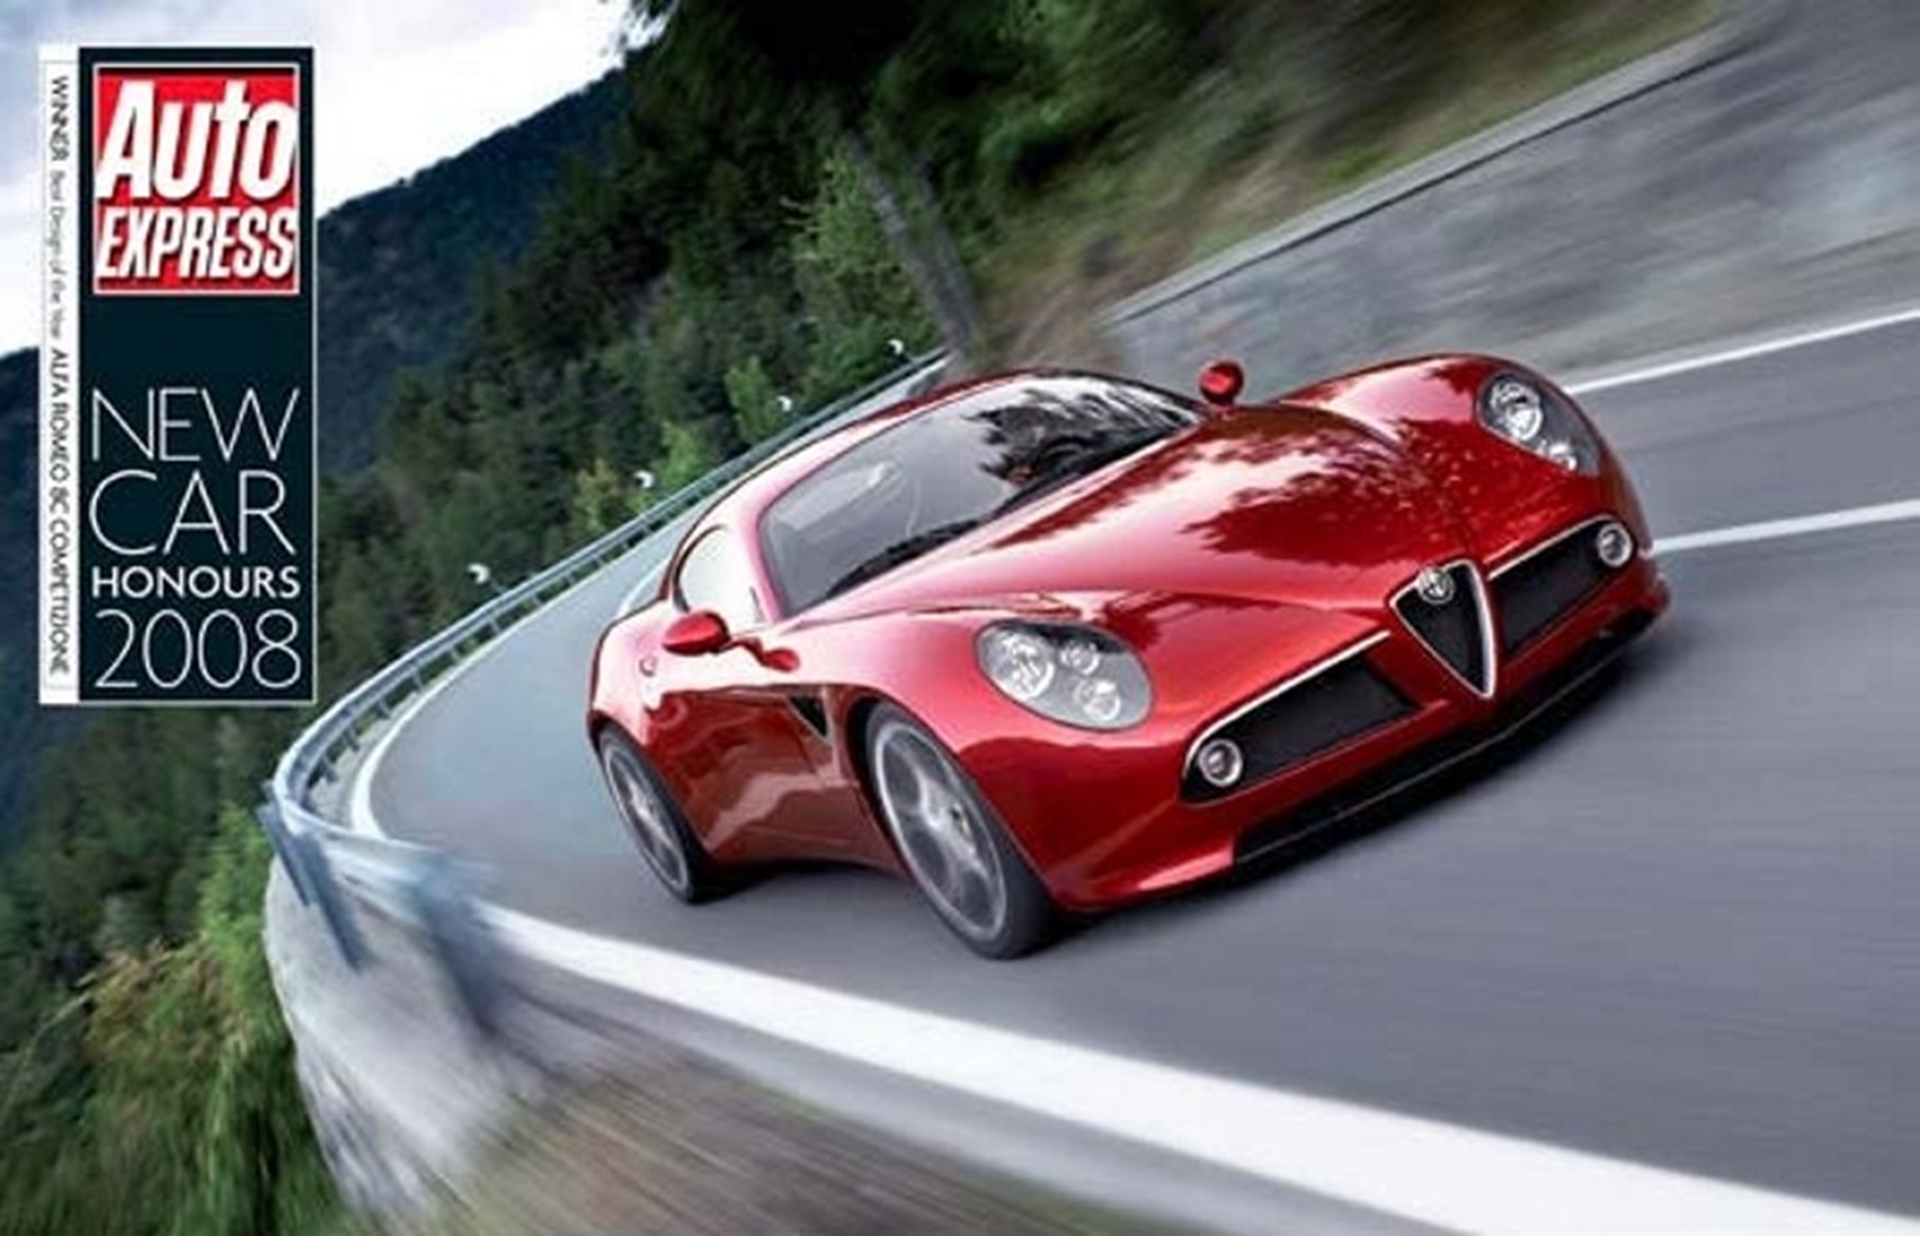 Alfa 8C Competizione wins Best Design of the Year